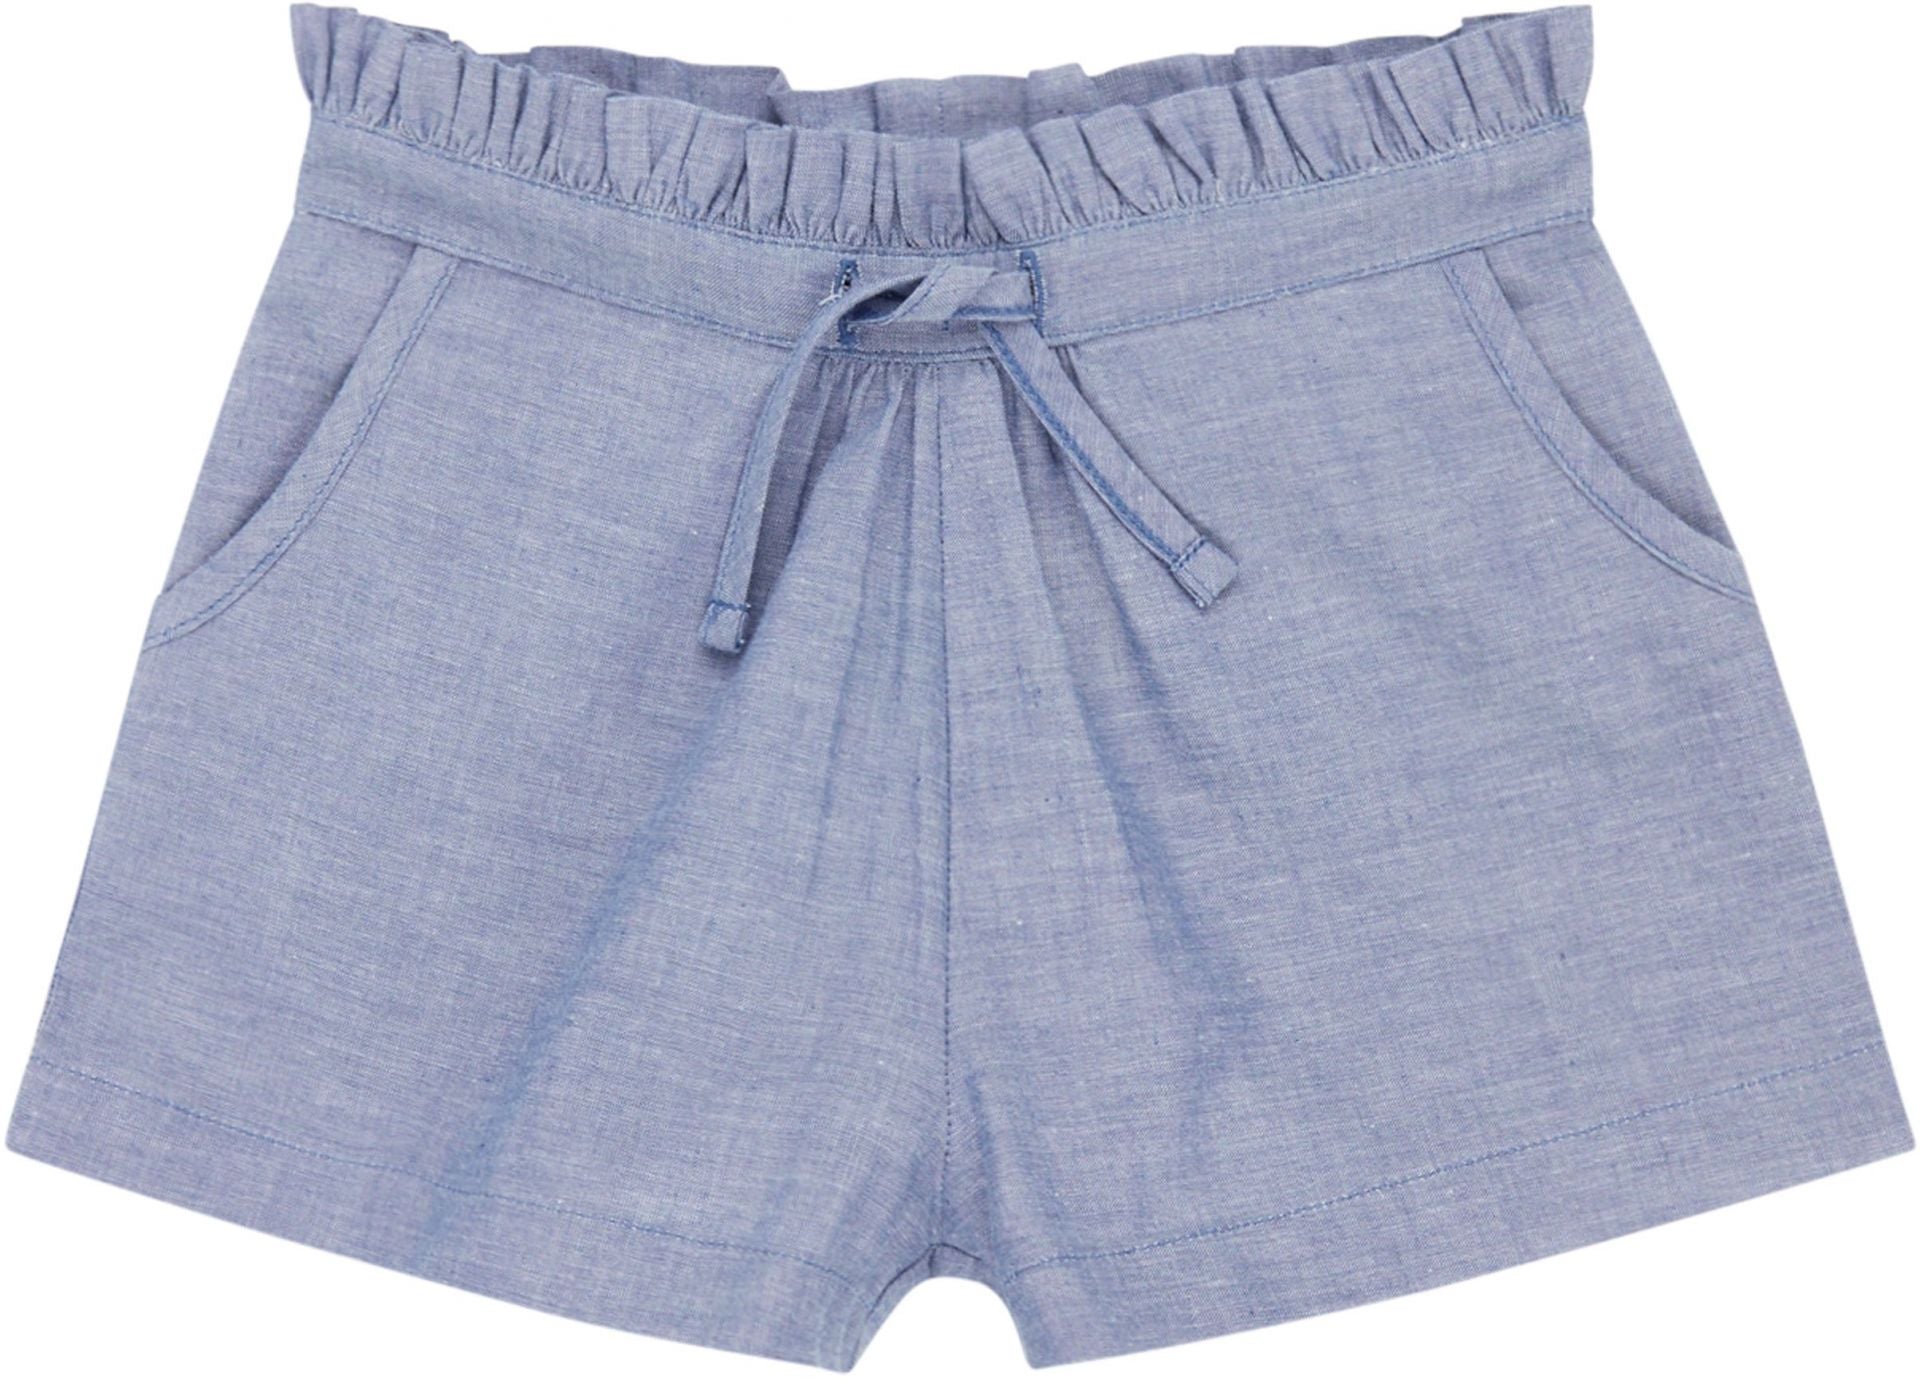 Sense organics - OLIVIA Baby Shorts Blue